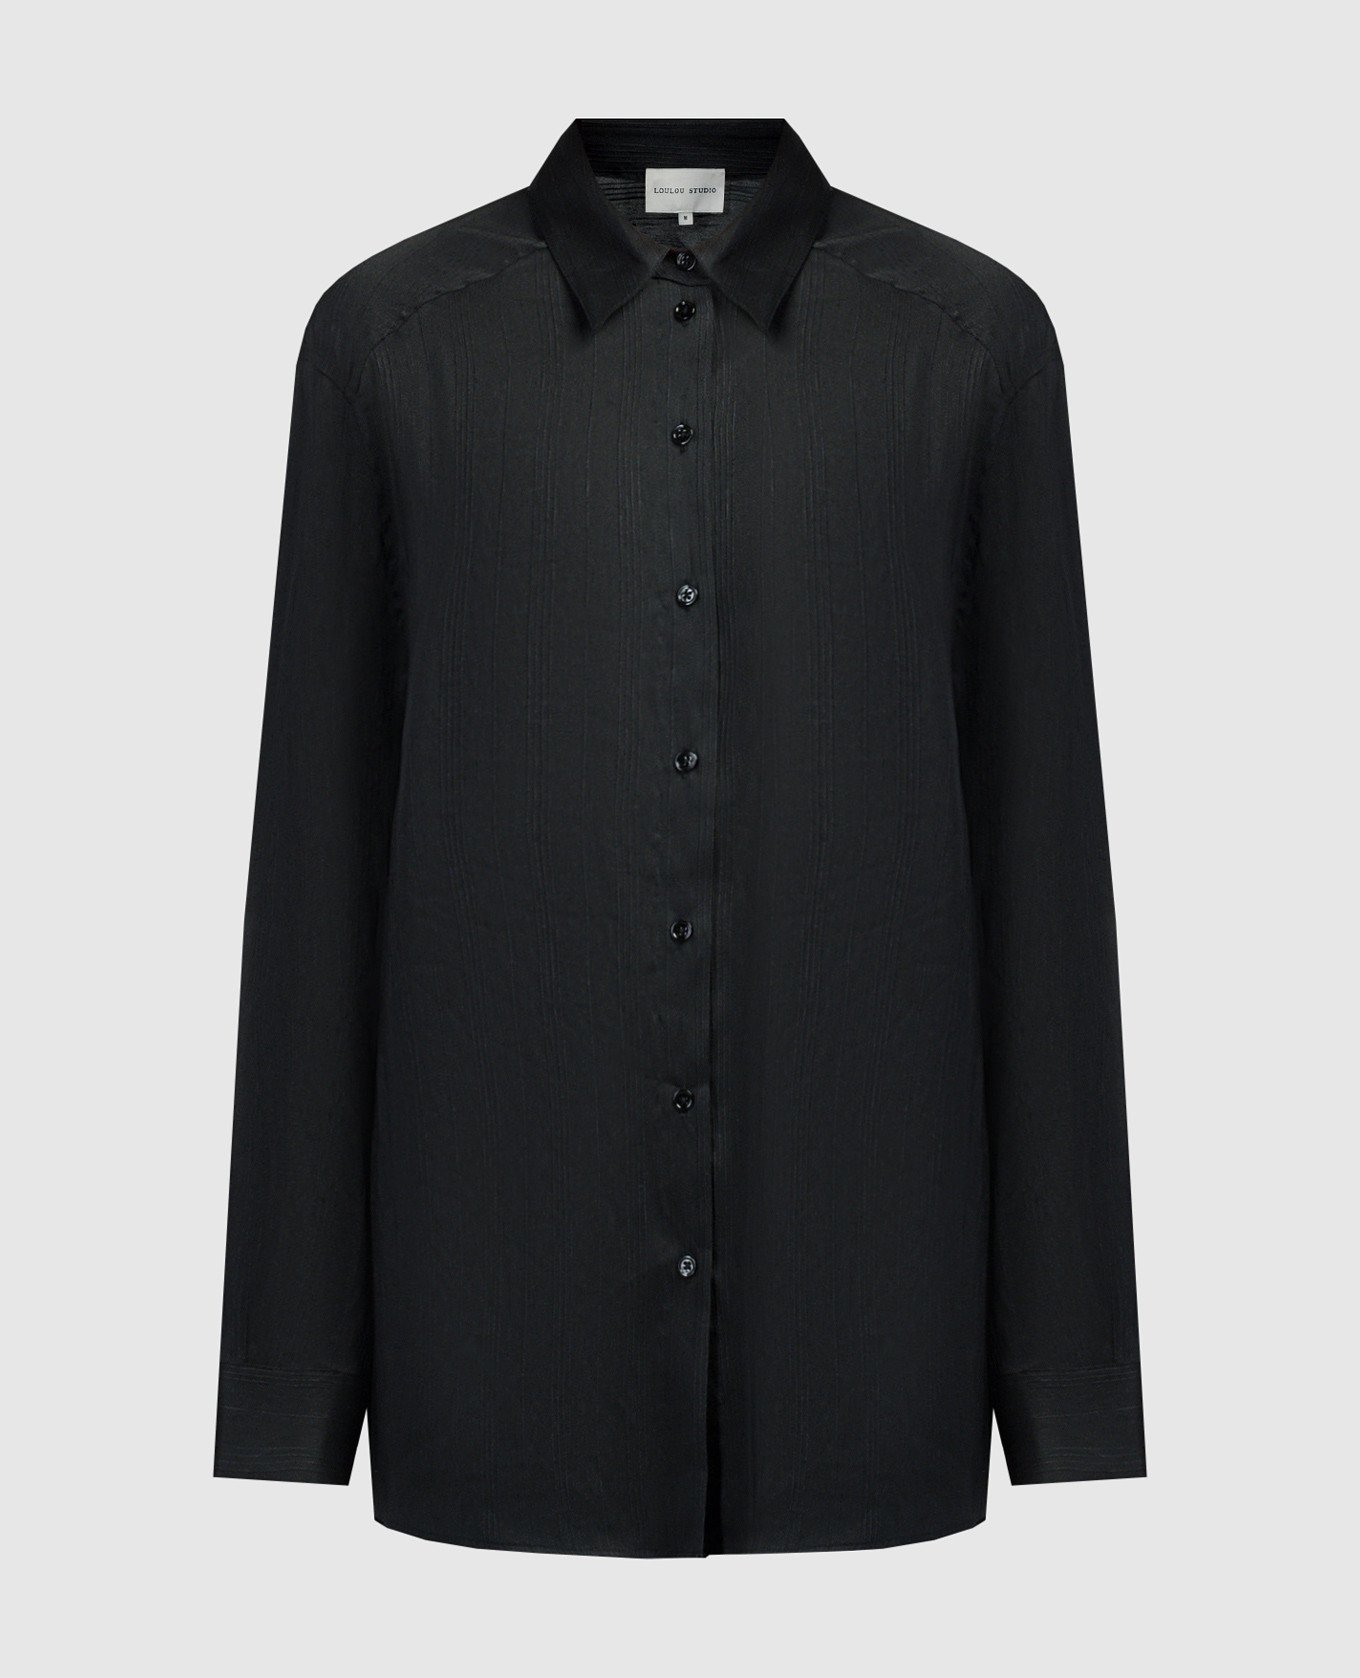 CANISA black linen and silk shirt